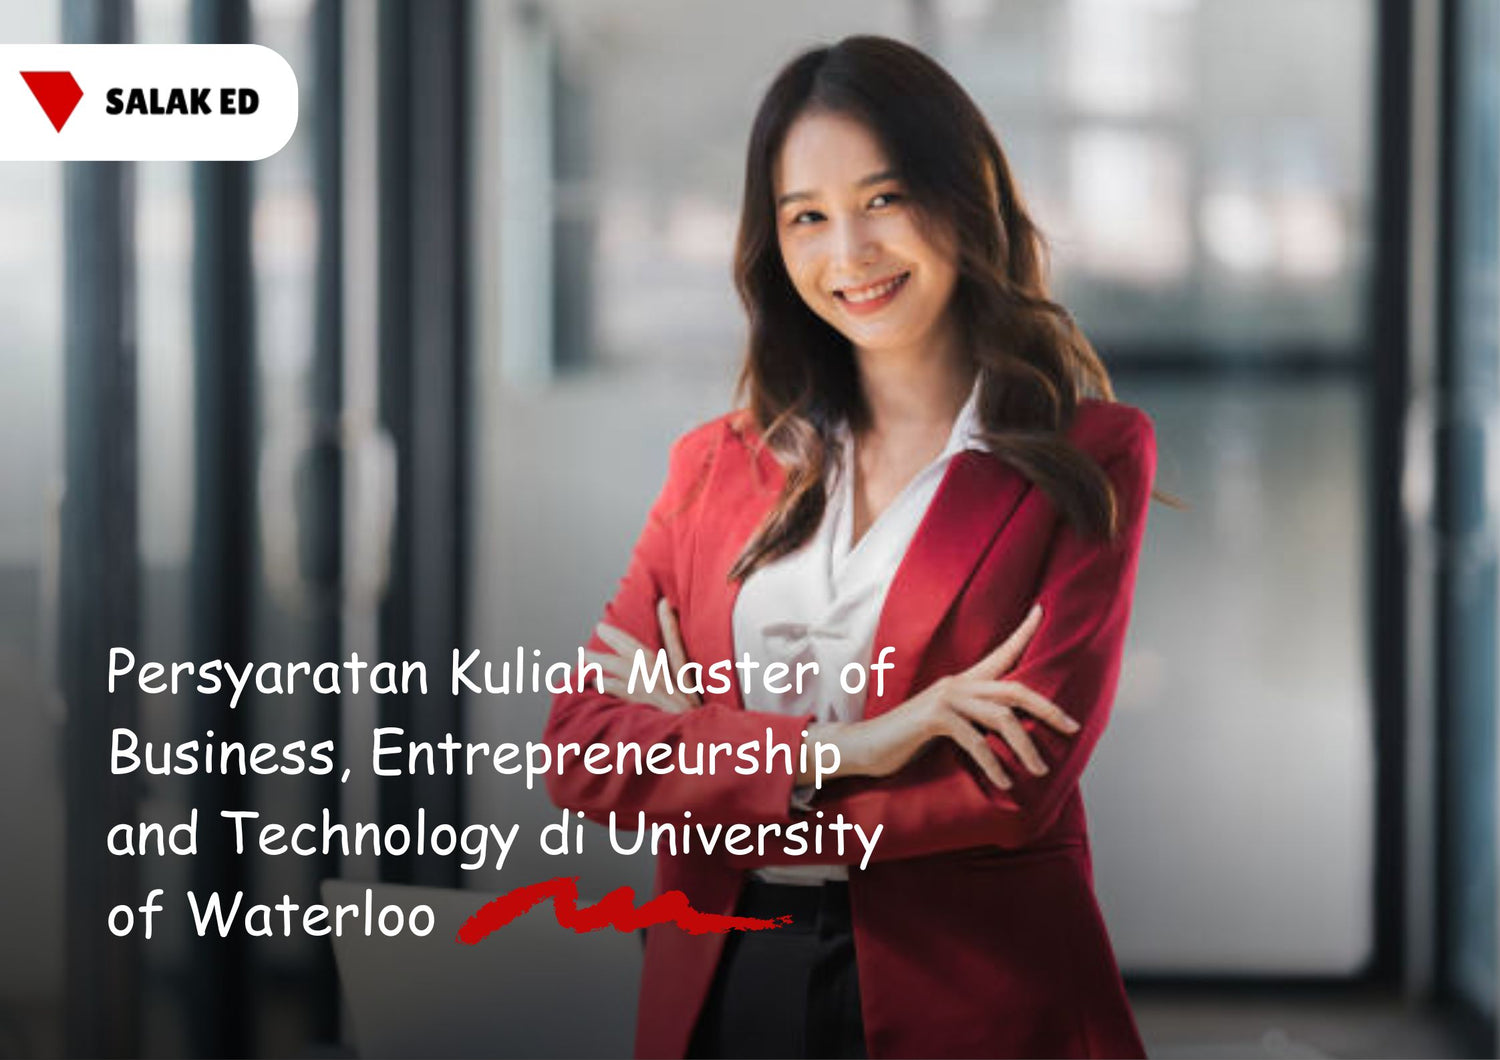 Persyaratan Kuliah Master of Business, Entrepreneurship and Technology di University of Waterloo